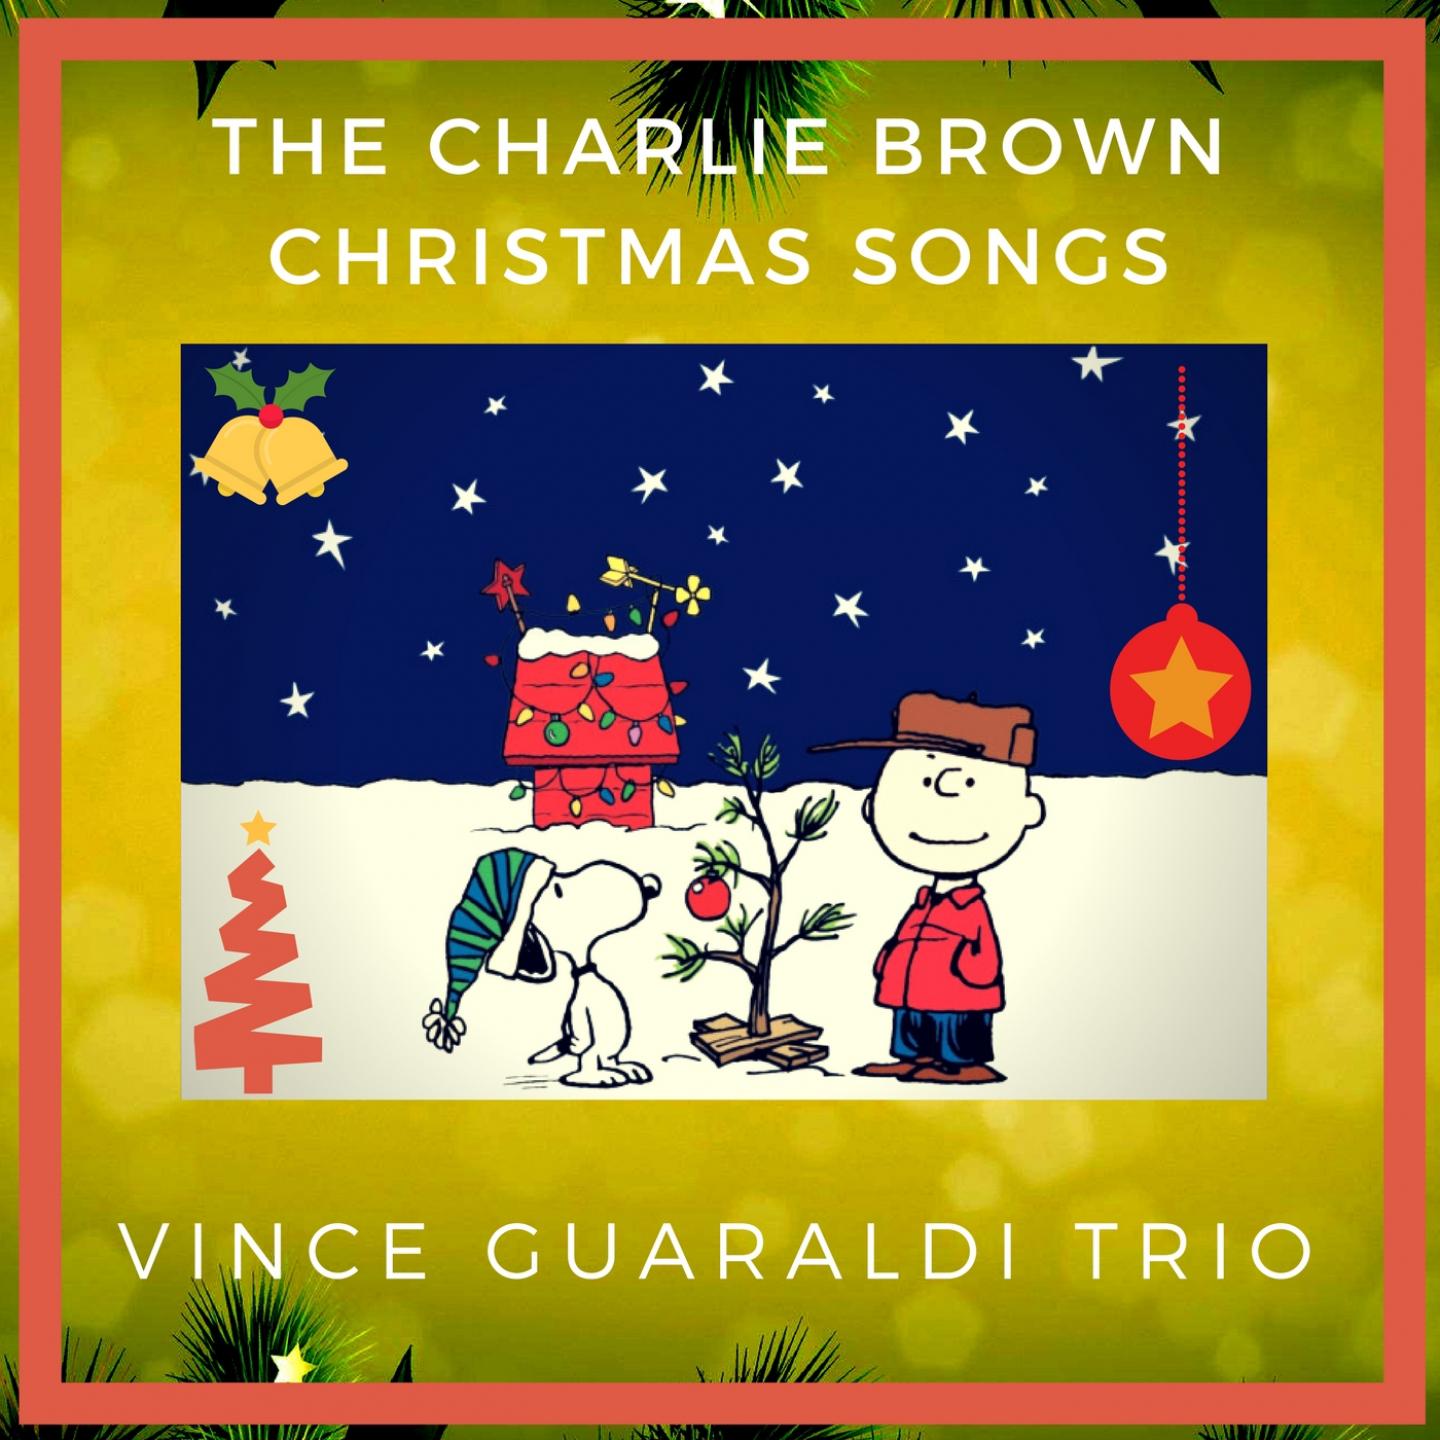 The Charlie Brown Christmas Songs